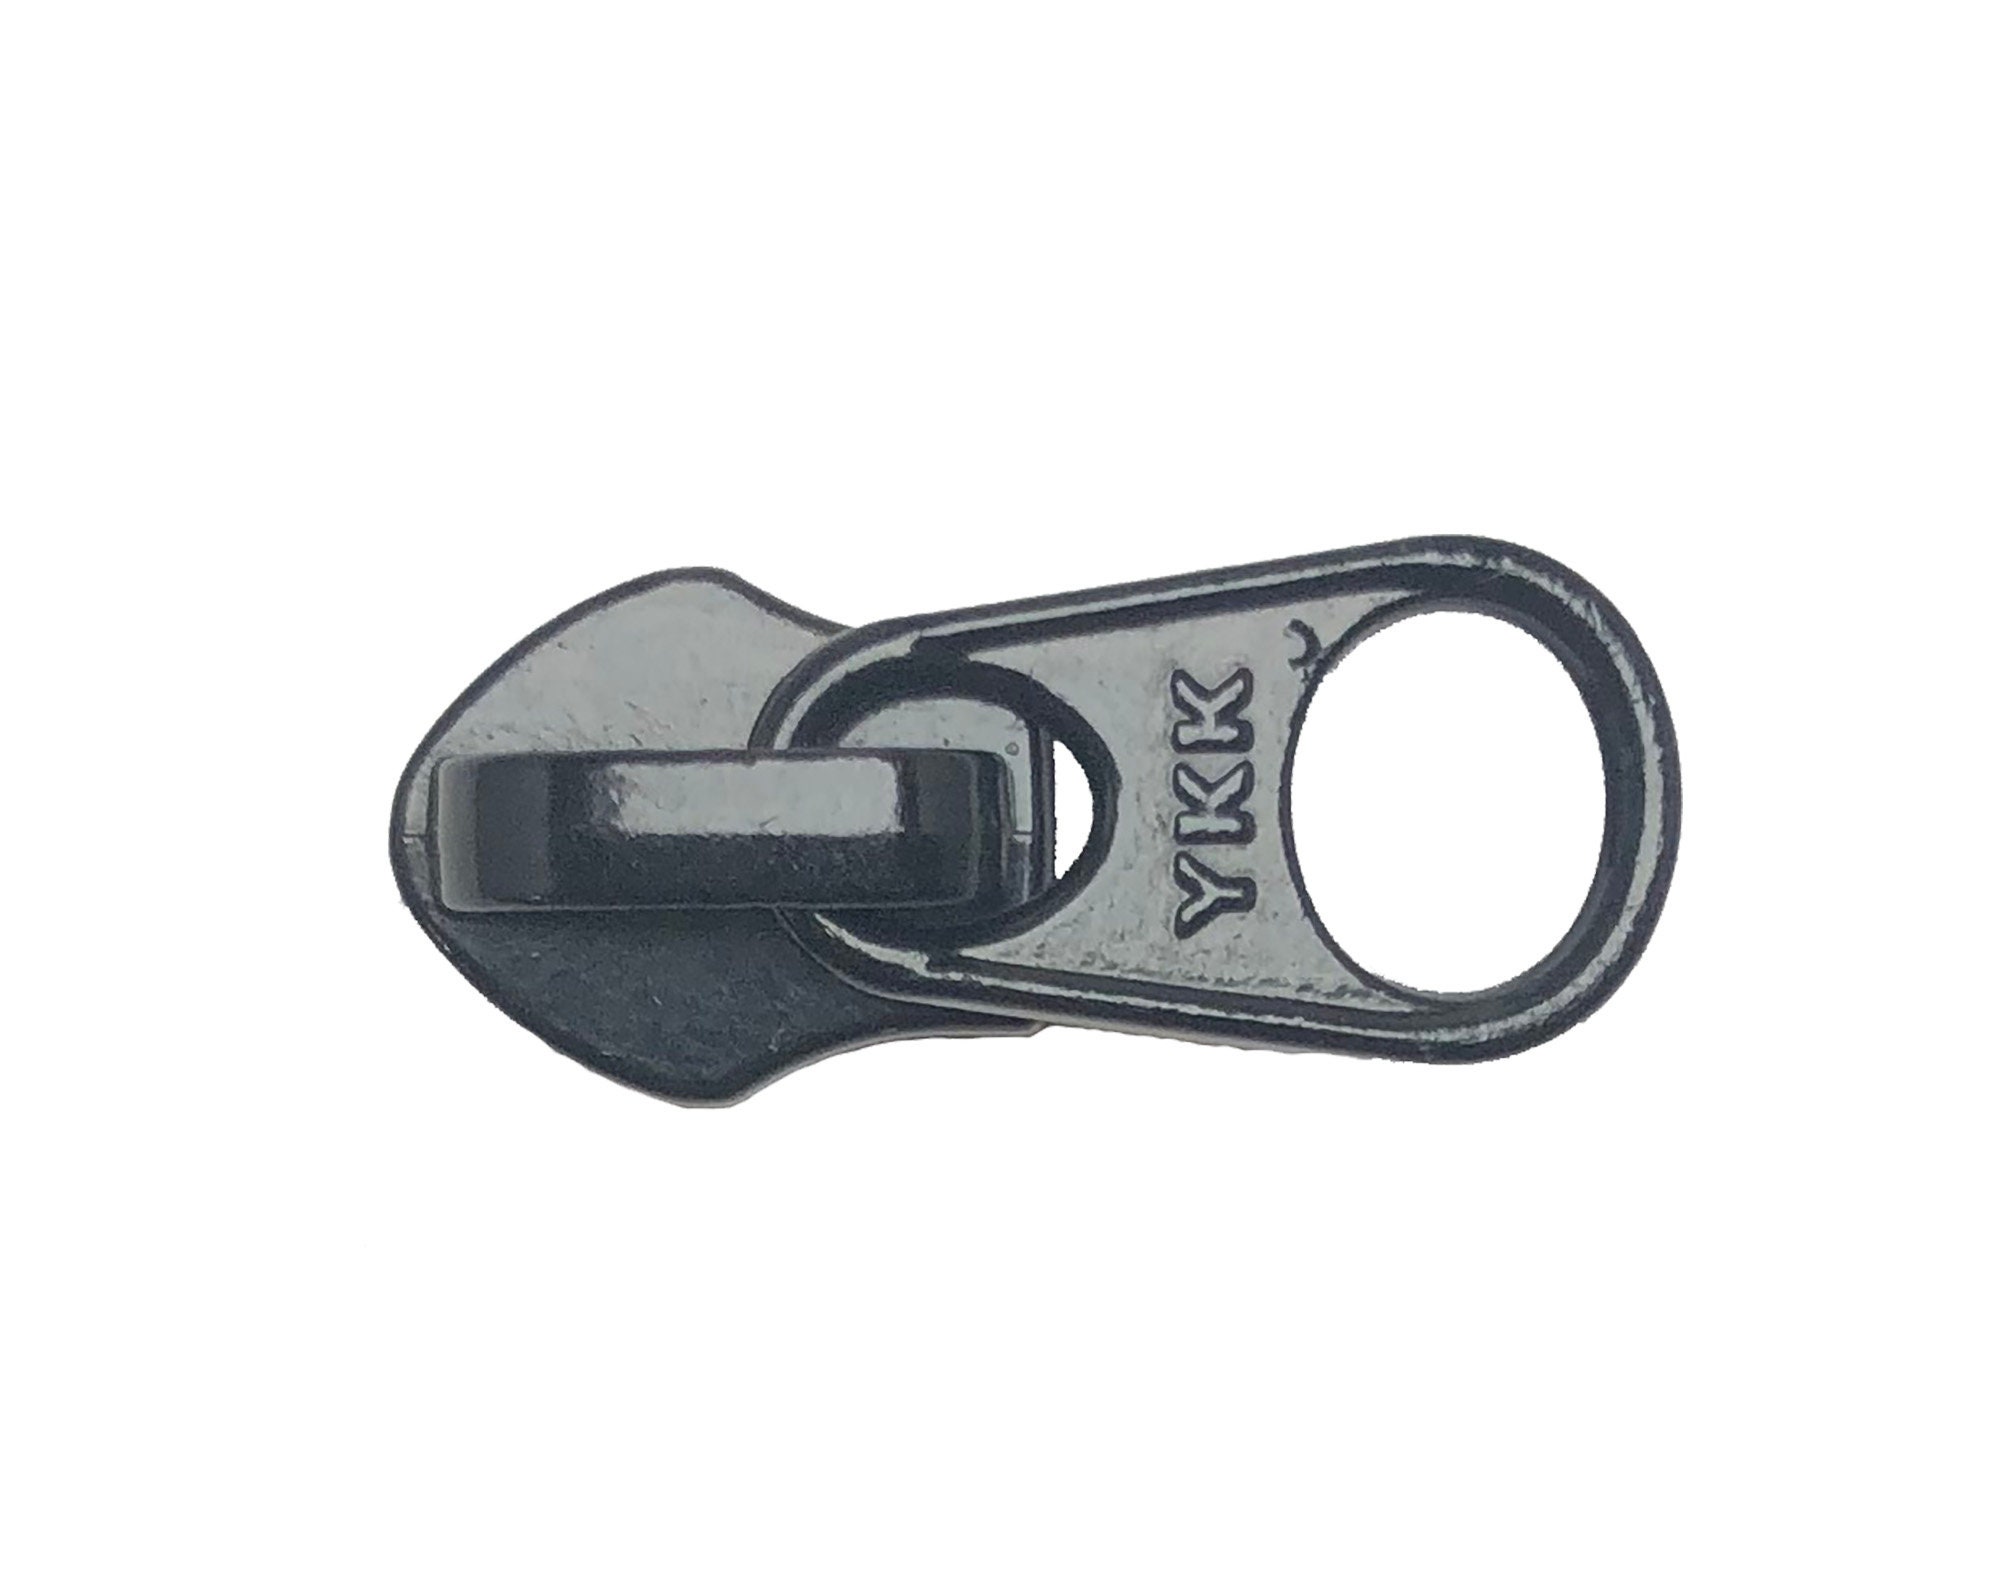 Zipper Sliders YKK or LENZIP #10 Metal Ziplon COIL Non-Locking Double Pull